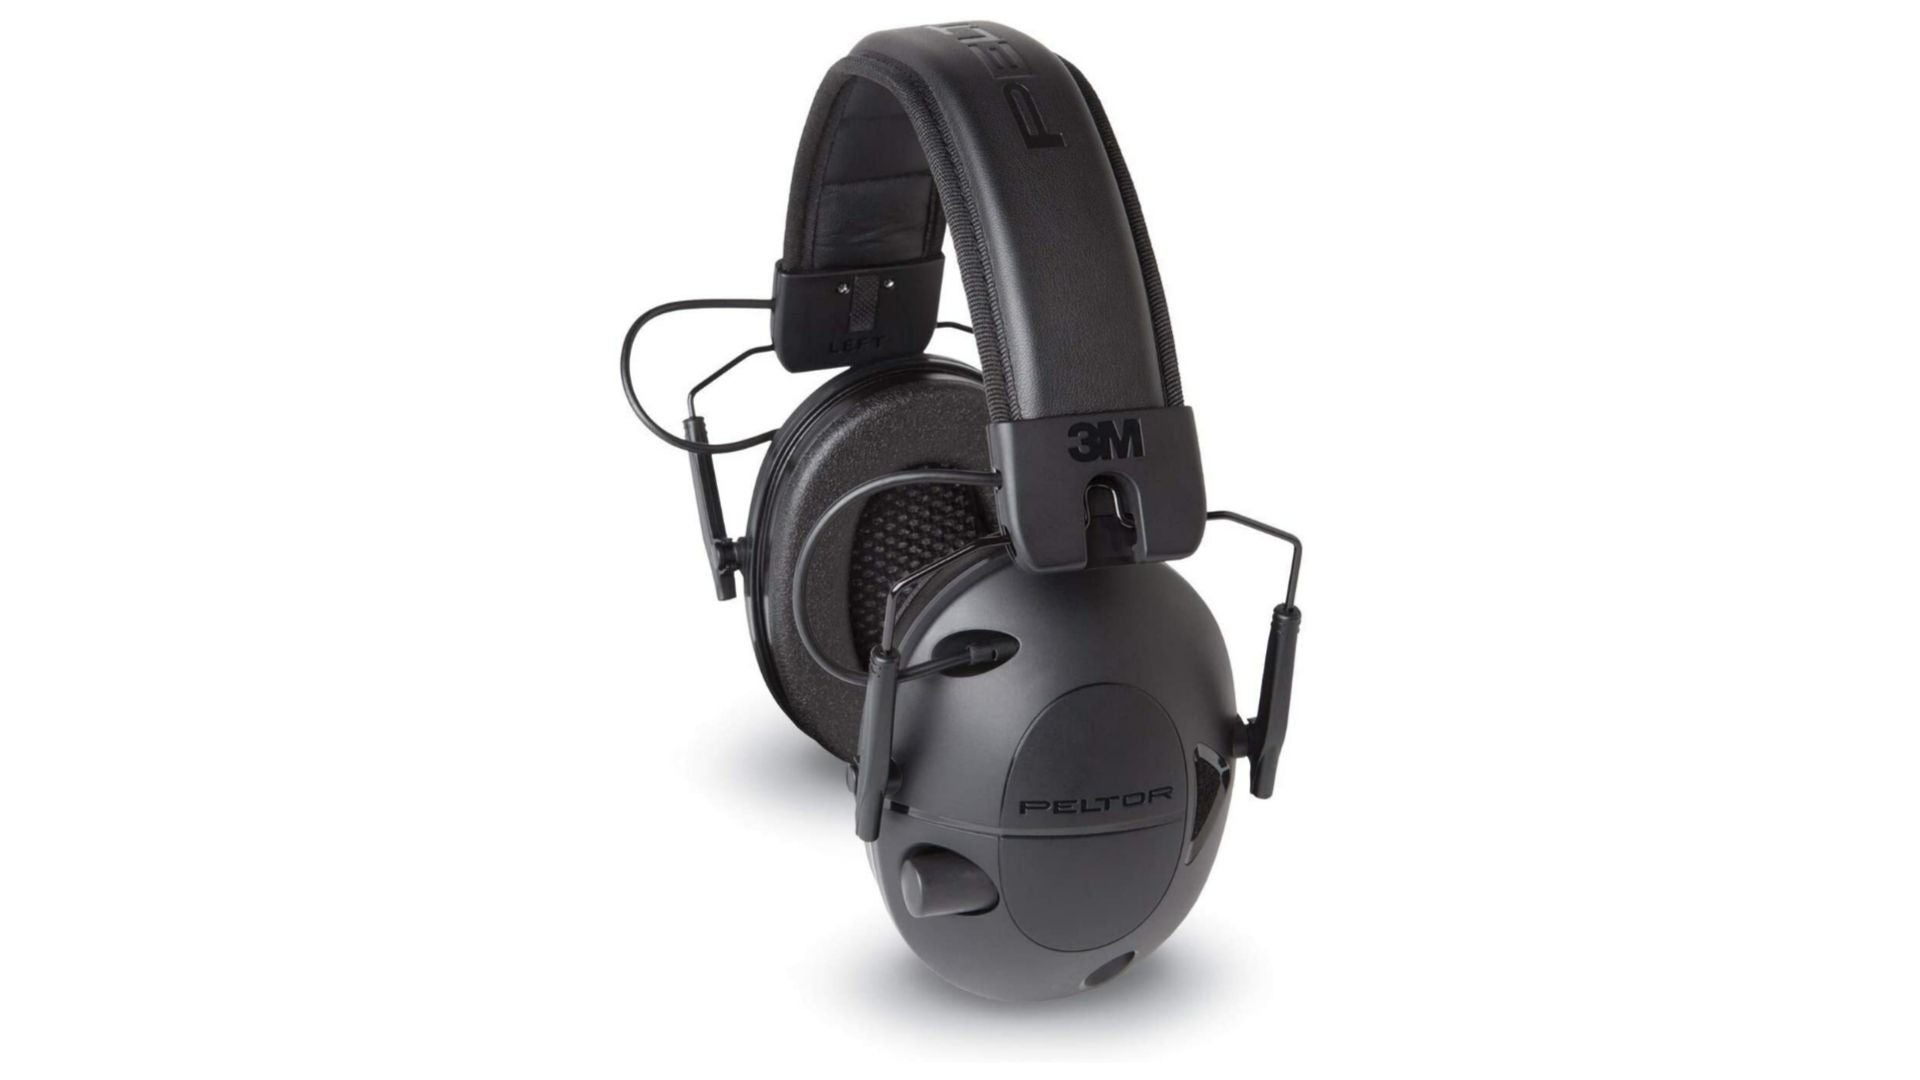 Ear Noise Sound Muff Protection Protective Ear Gear Shooting Range Ear Phones 